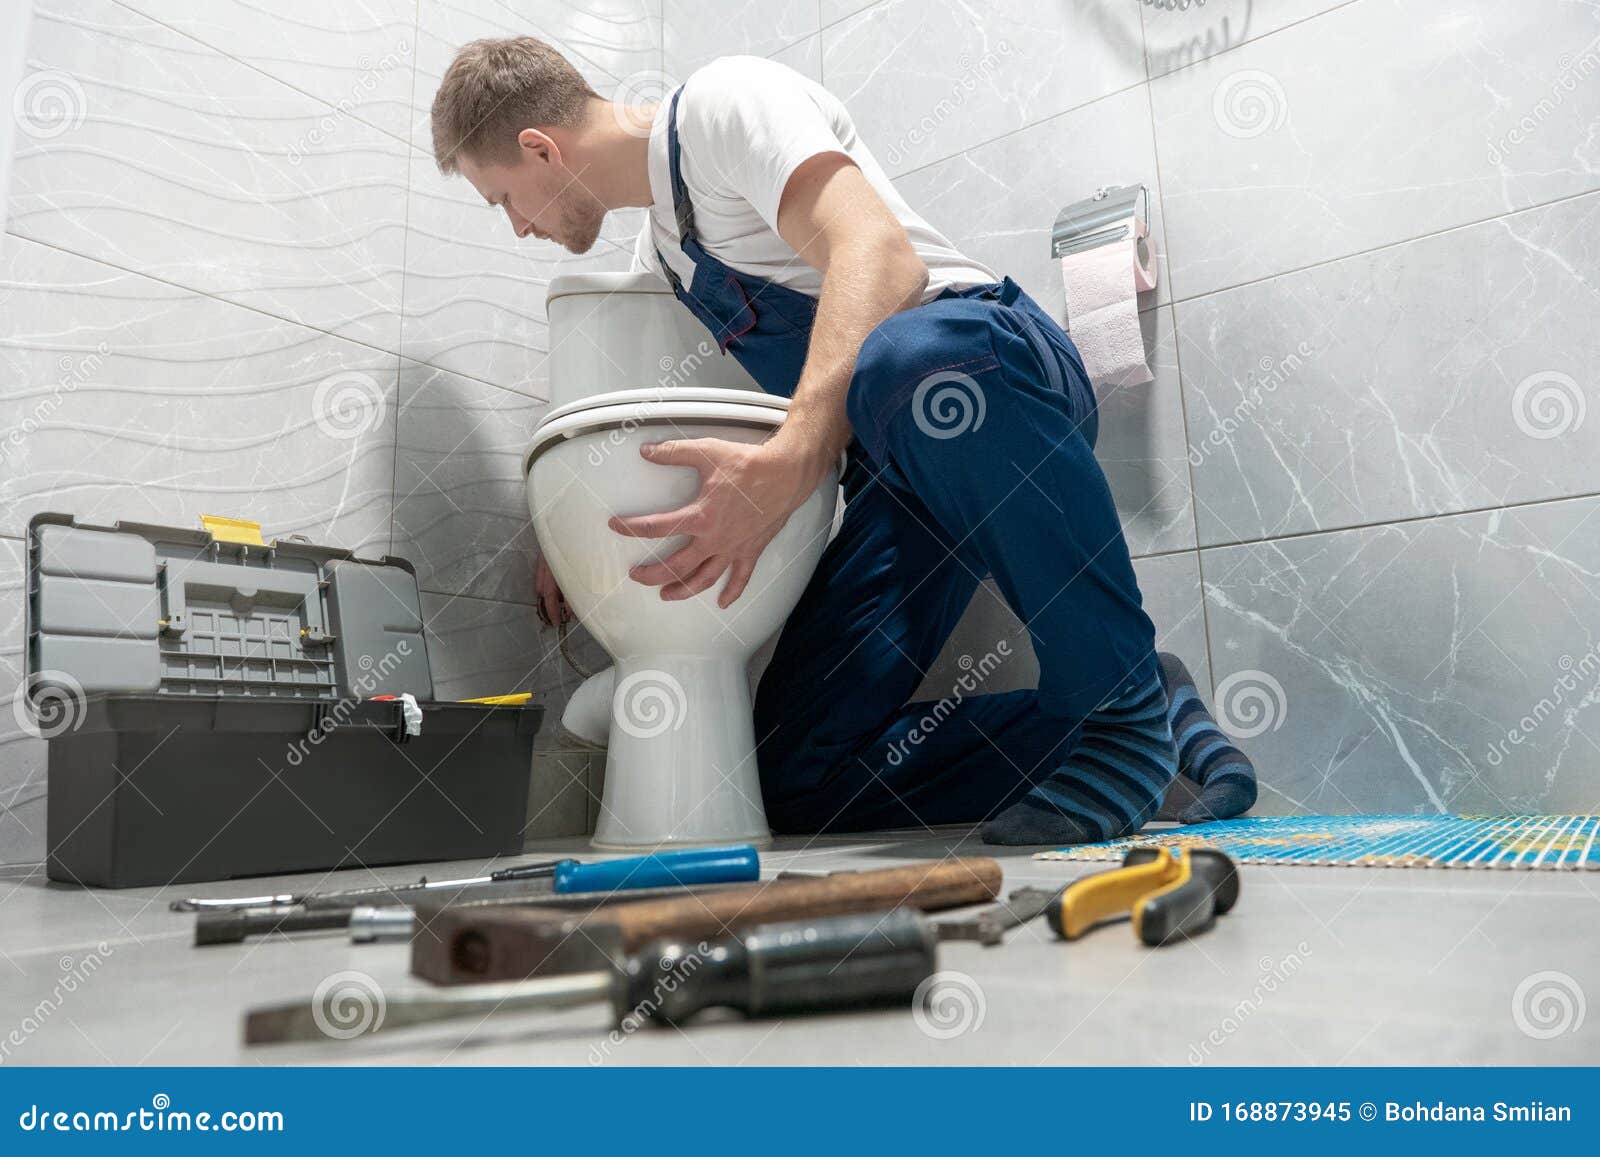 man plumber in uniform installing toilet bowl using instrument kit professional repair service